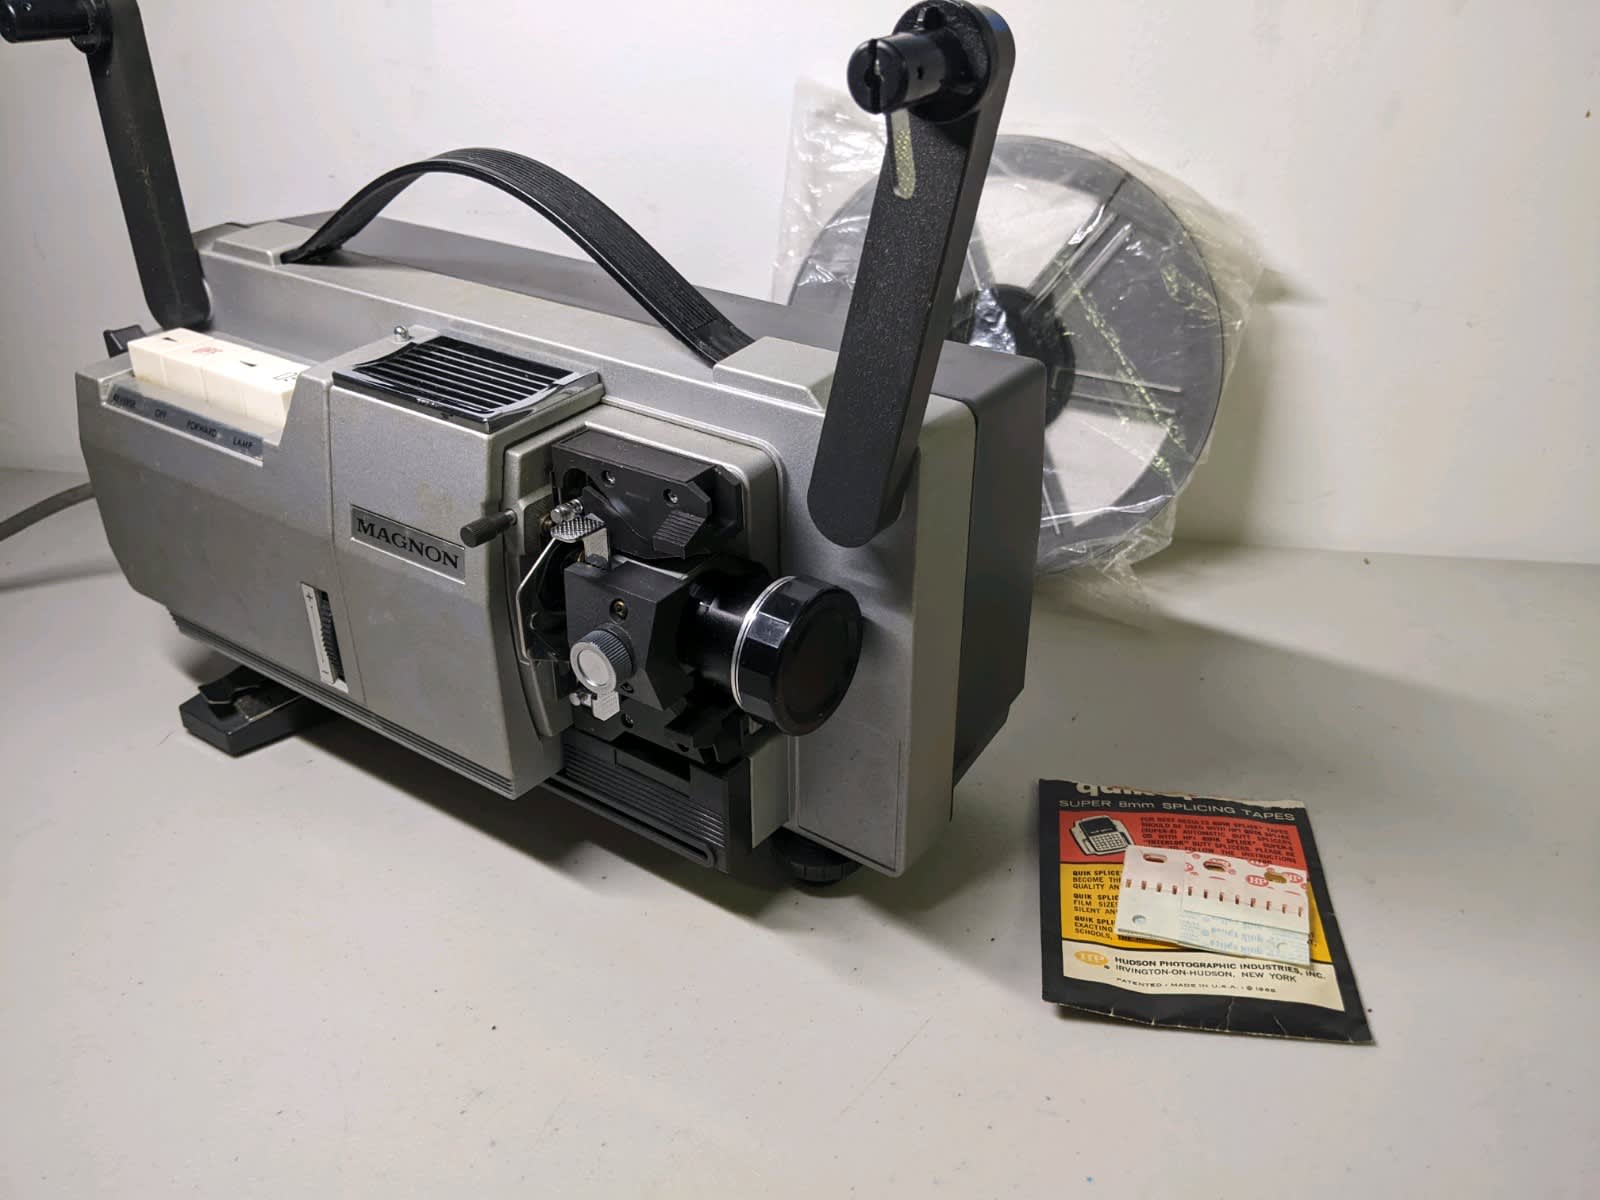 Hanimex SR9000 Super 8 Sound Movie Projector (Missing One Reel)